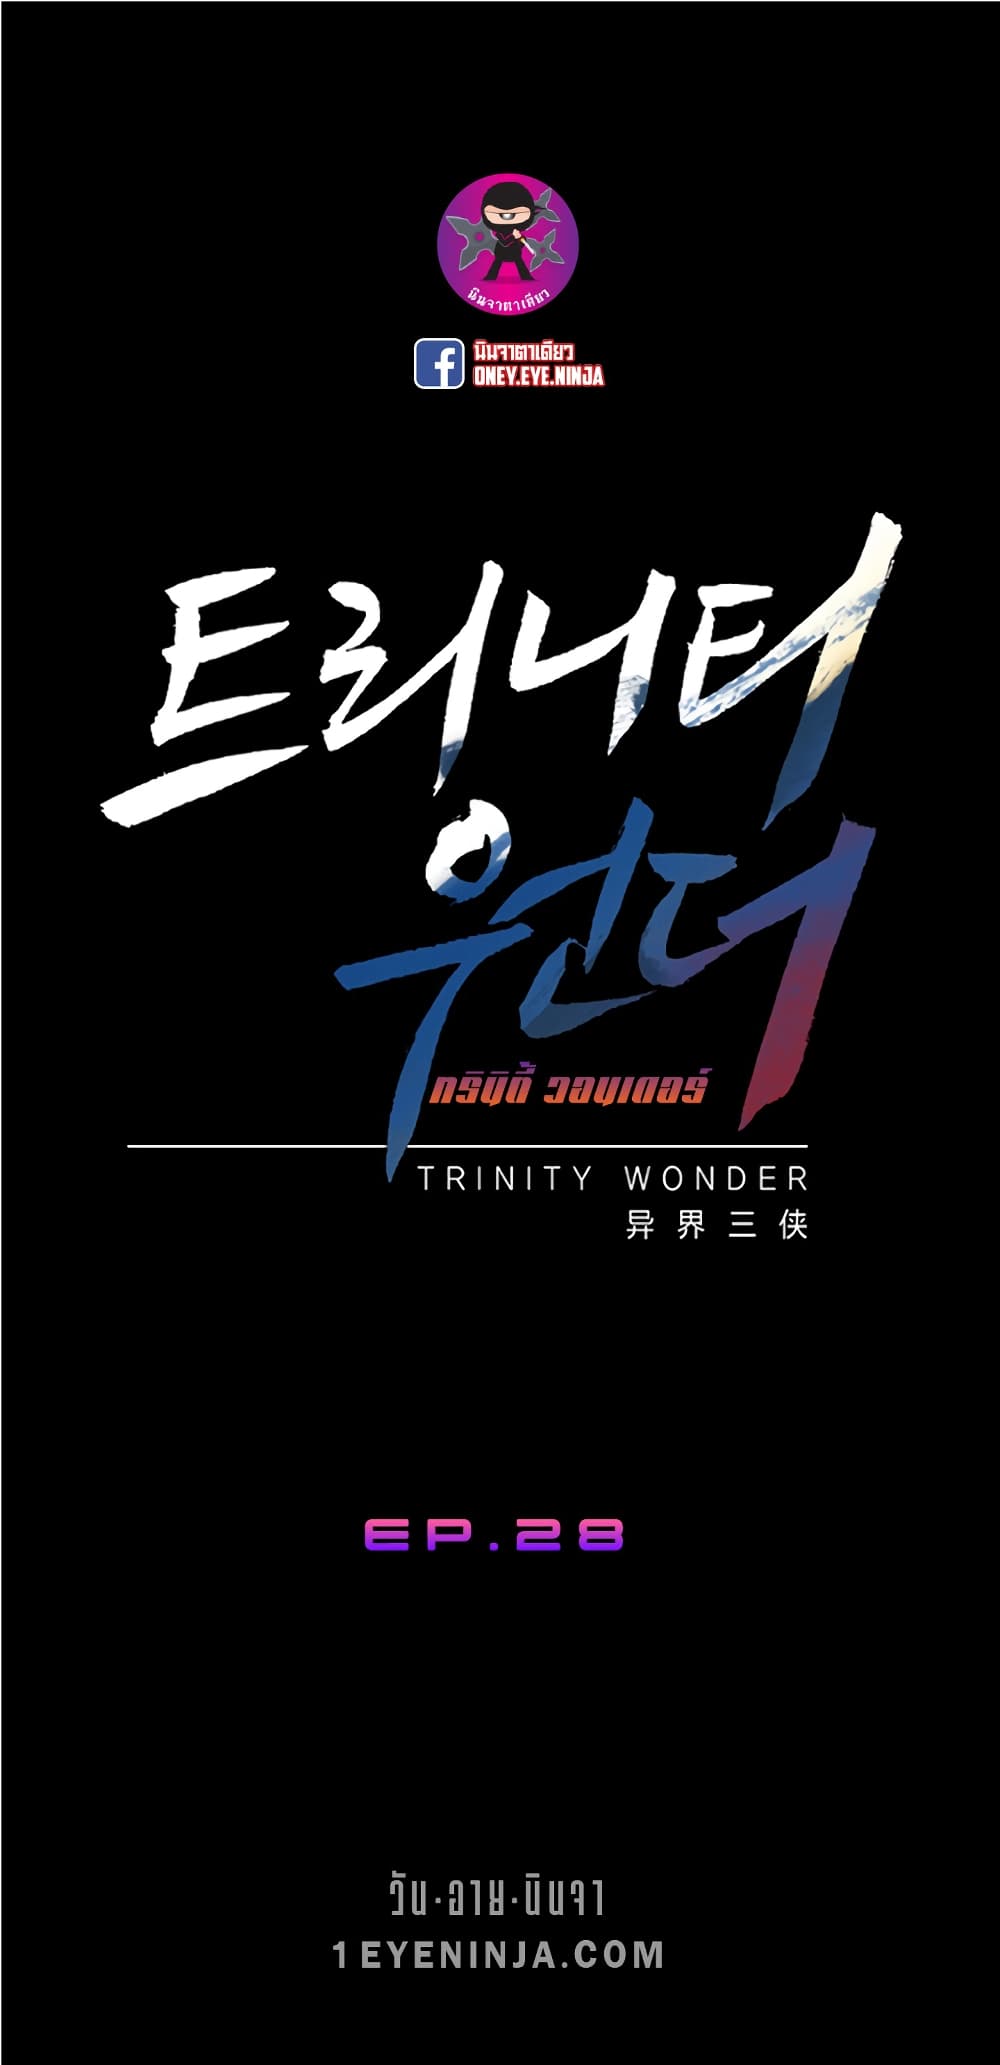 Trinity Wonder 28-28